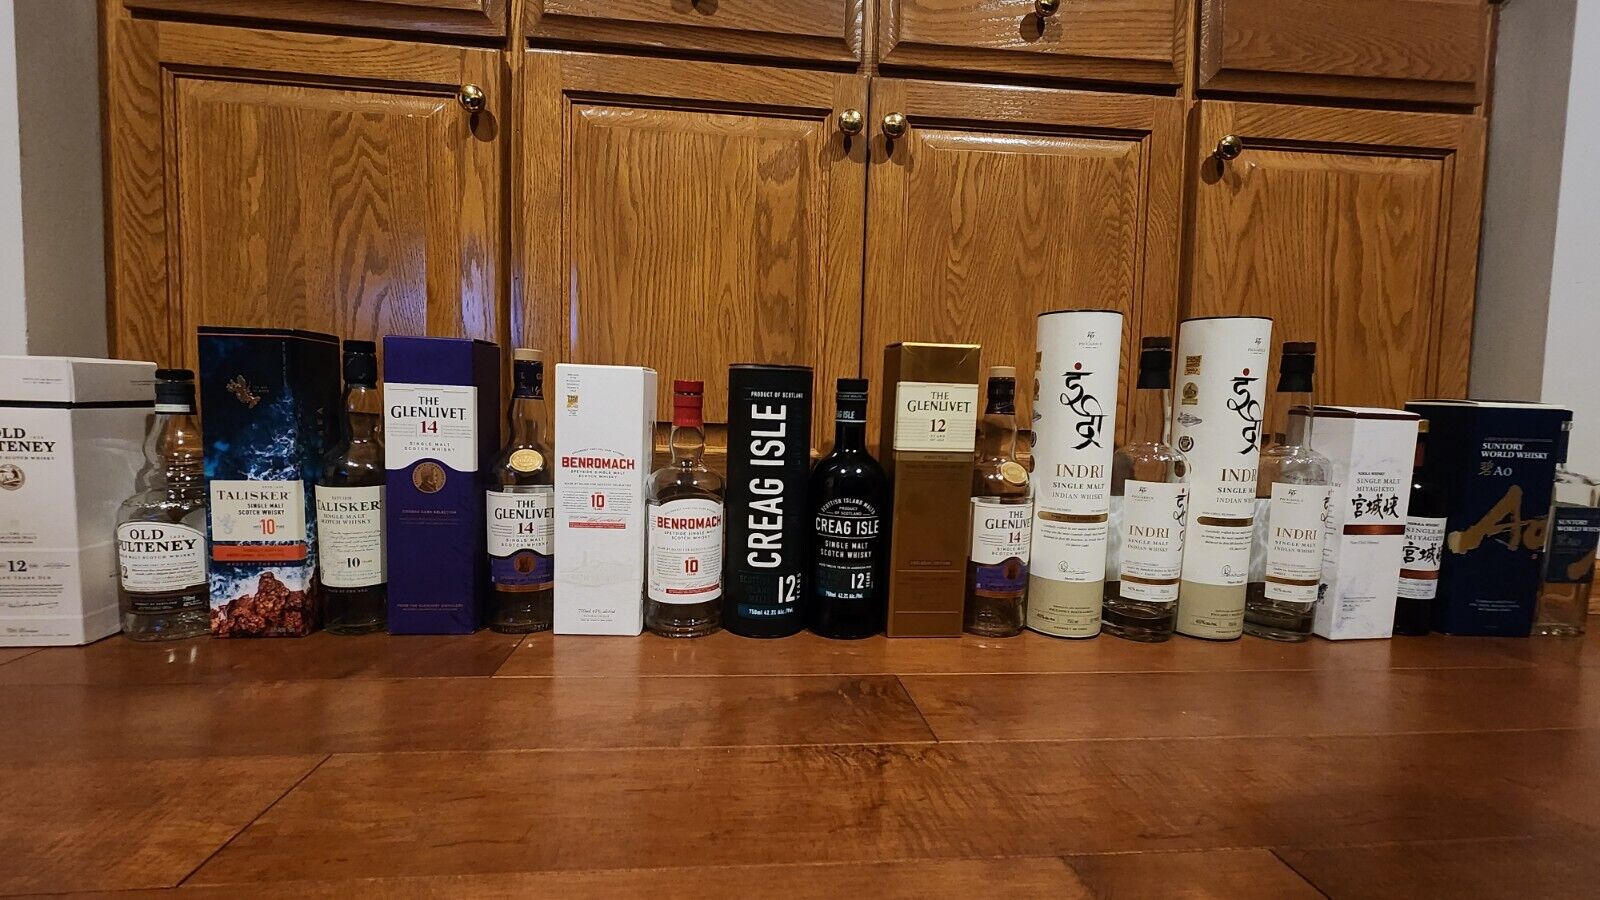 Lot of 10 Empty Whisky Bottles Indri,Old Pulteney,Creag isle,Glenlivet,Benromach